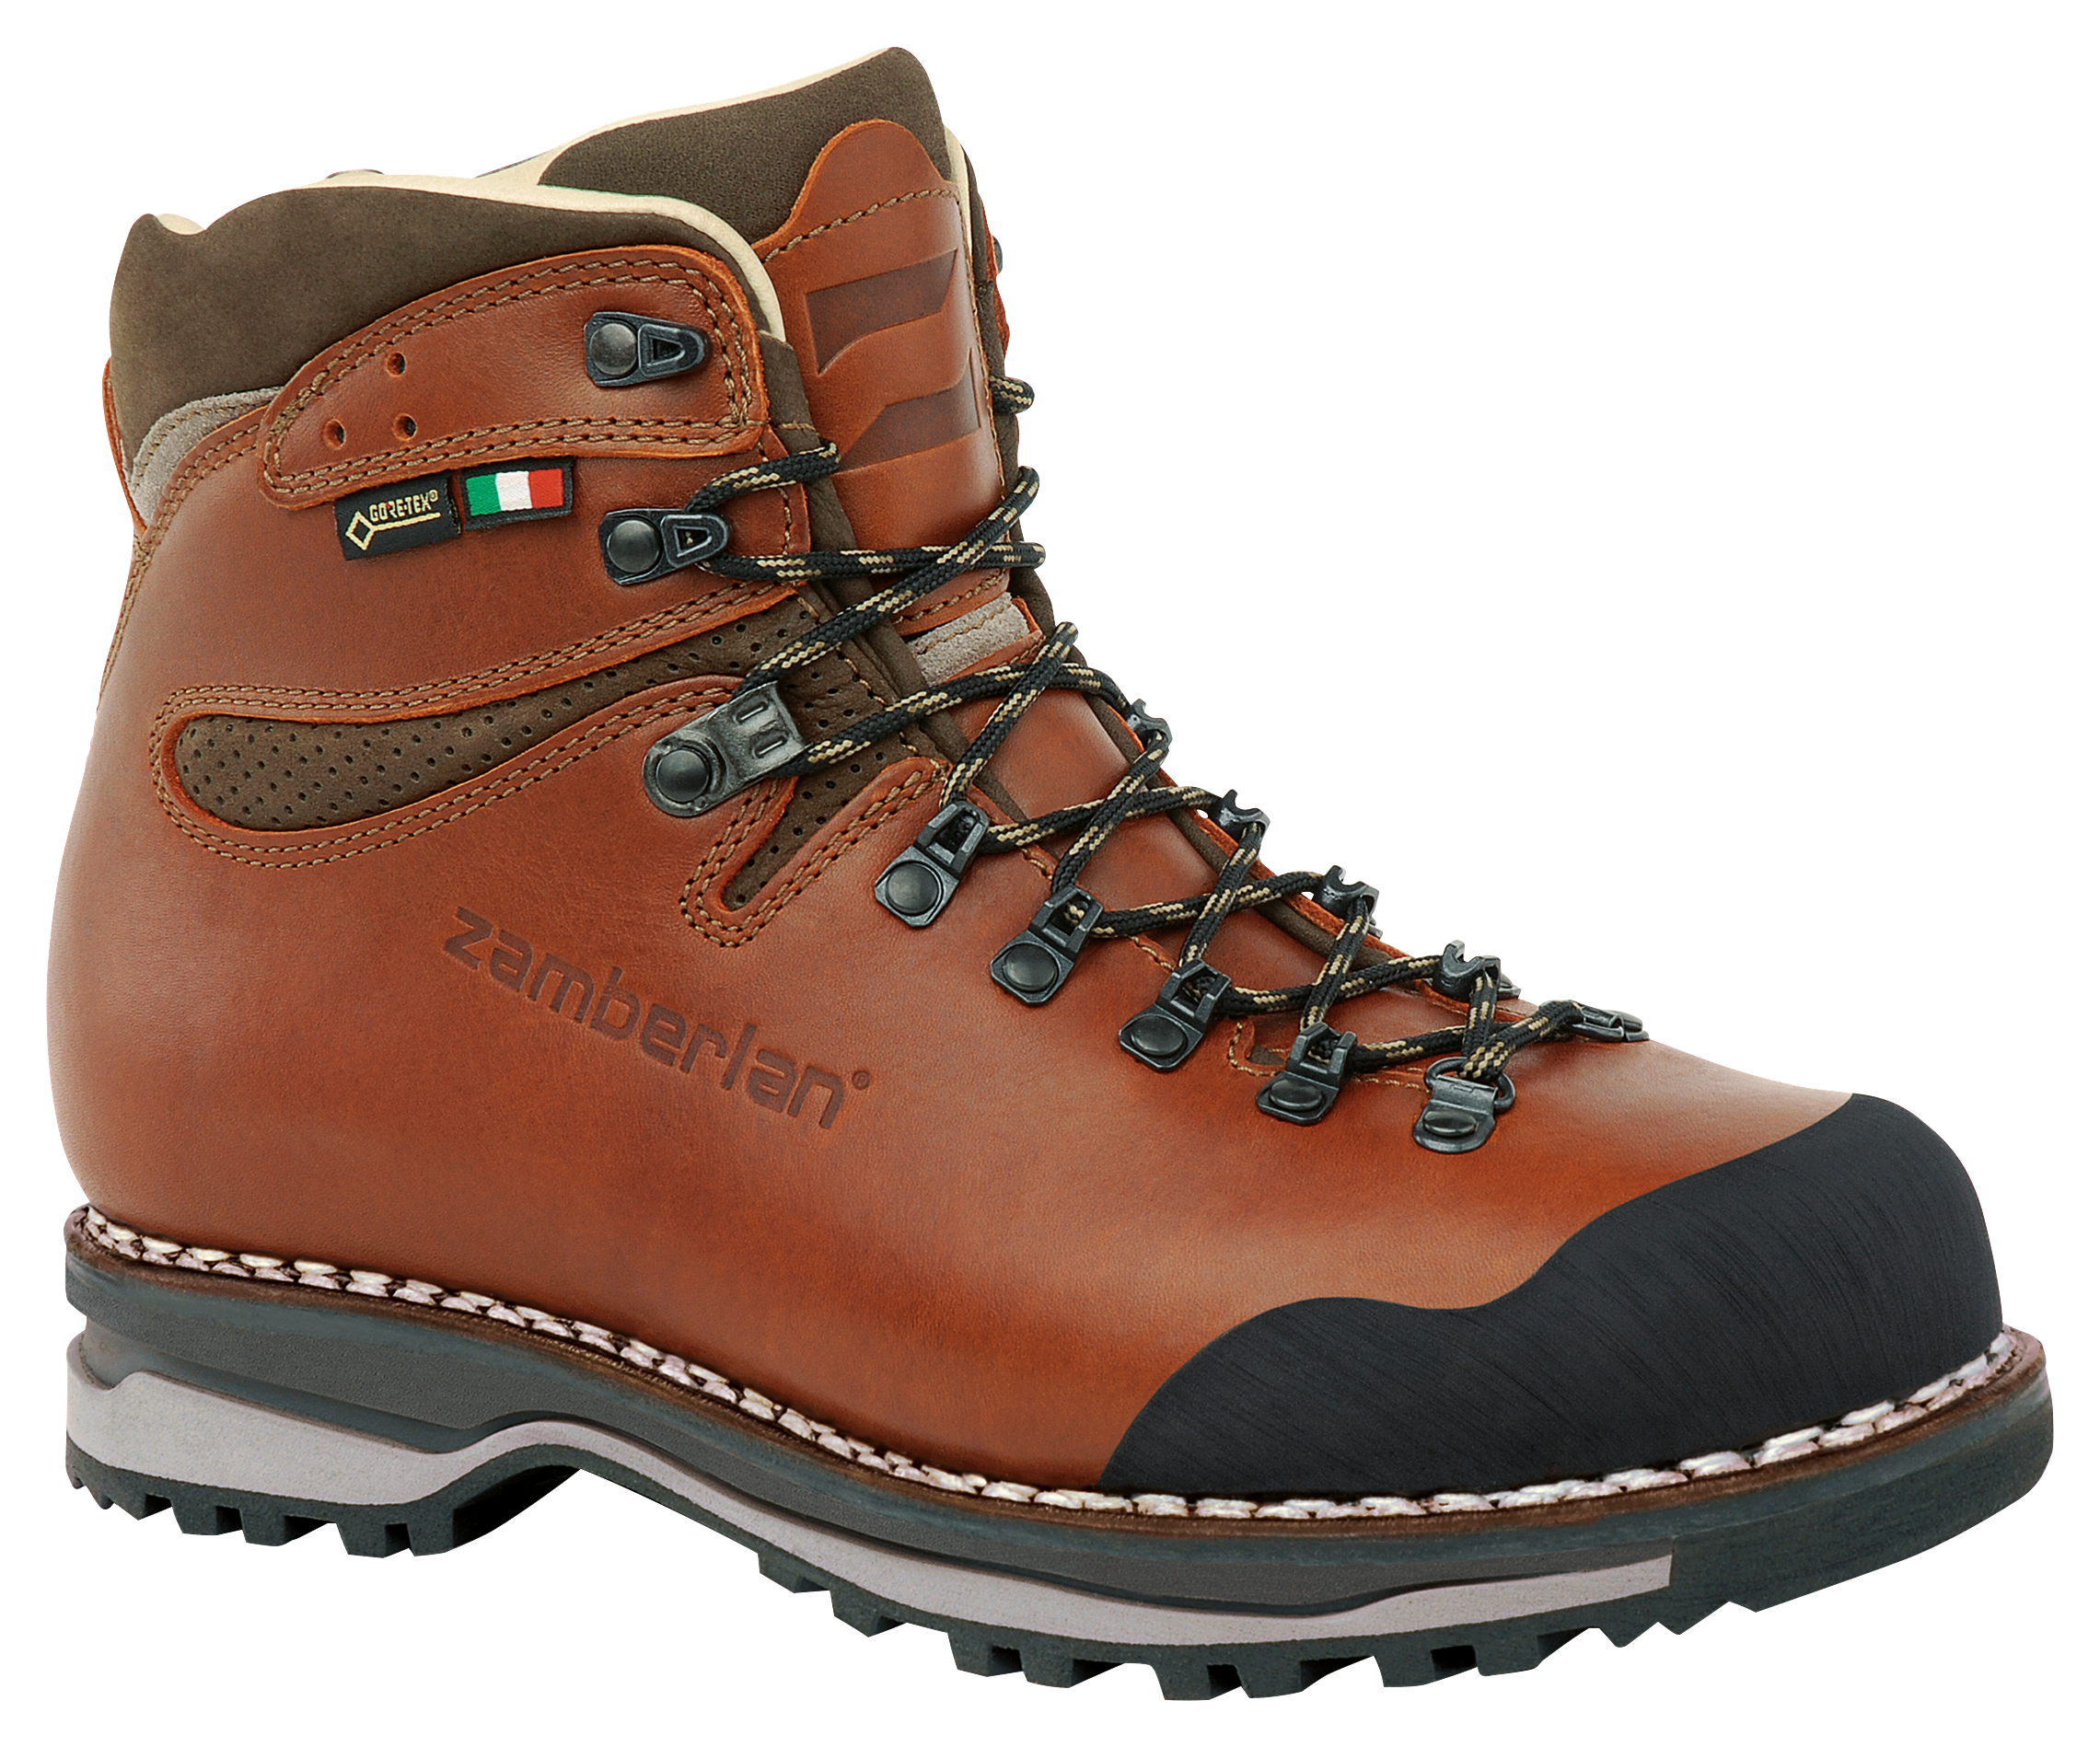 Zamberlan 1025 Tofane NW GTX RR Waterproof Hiking Boots for Men - Waxed Brick - 11.5M